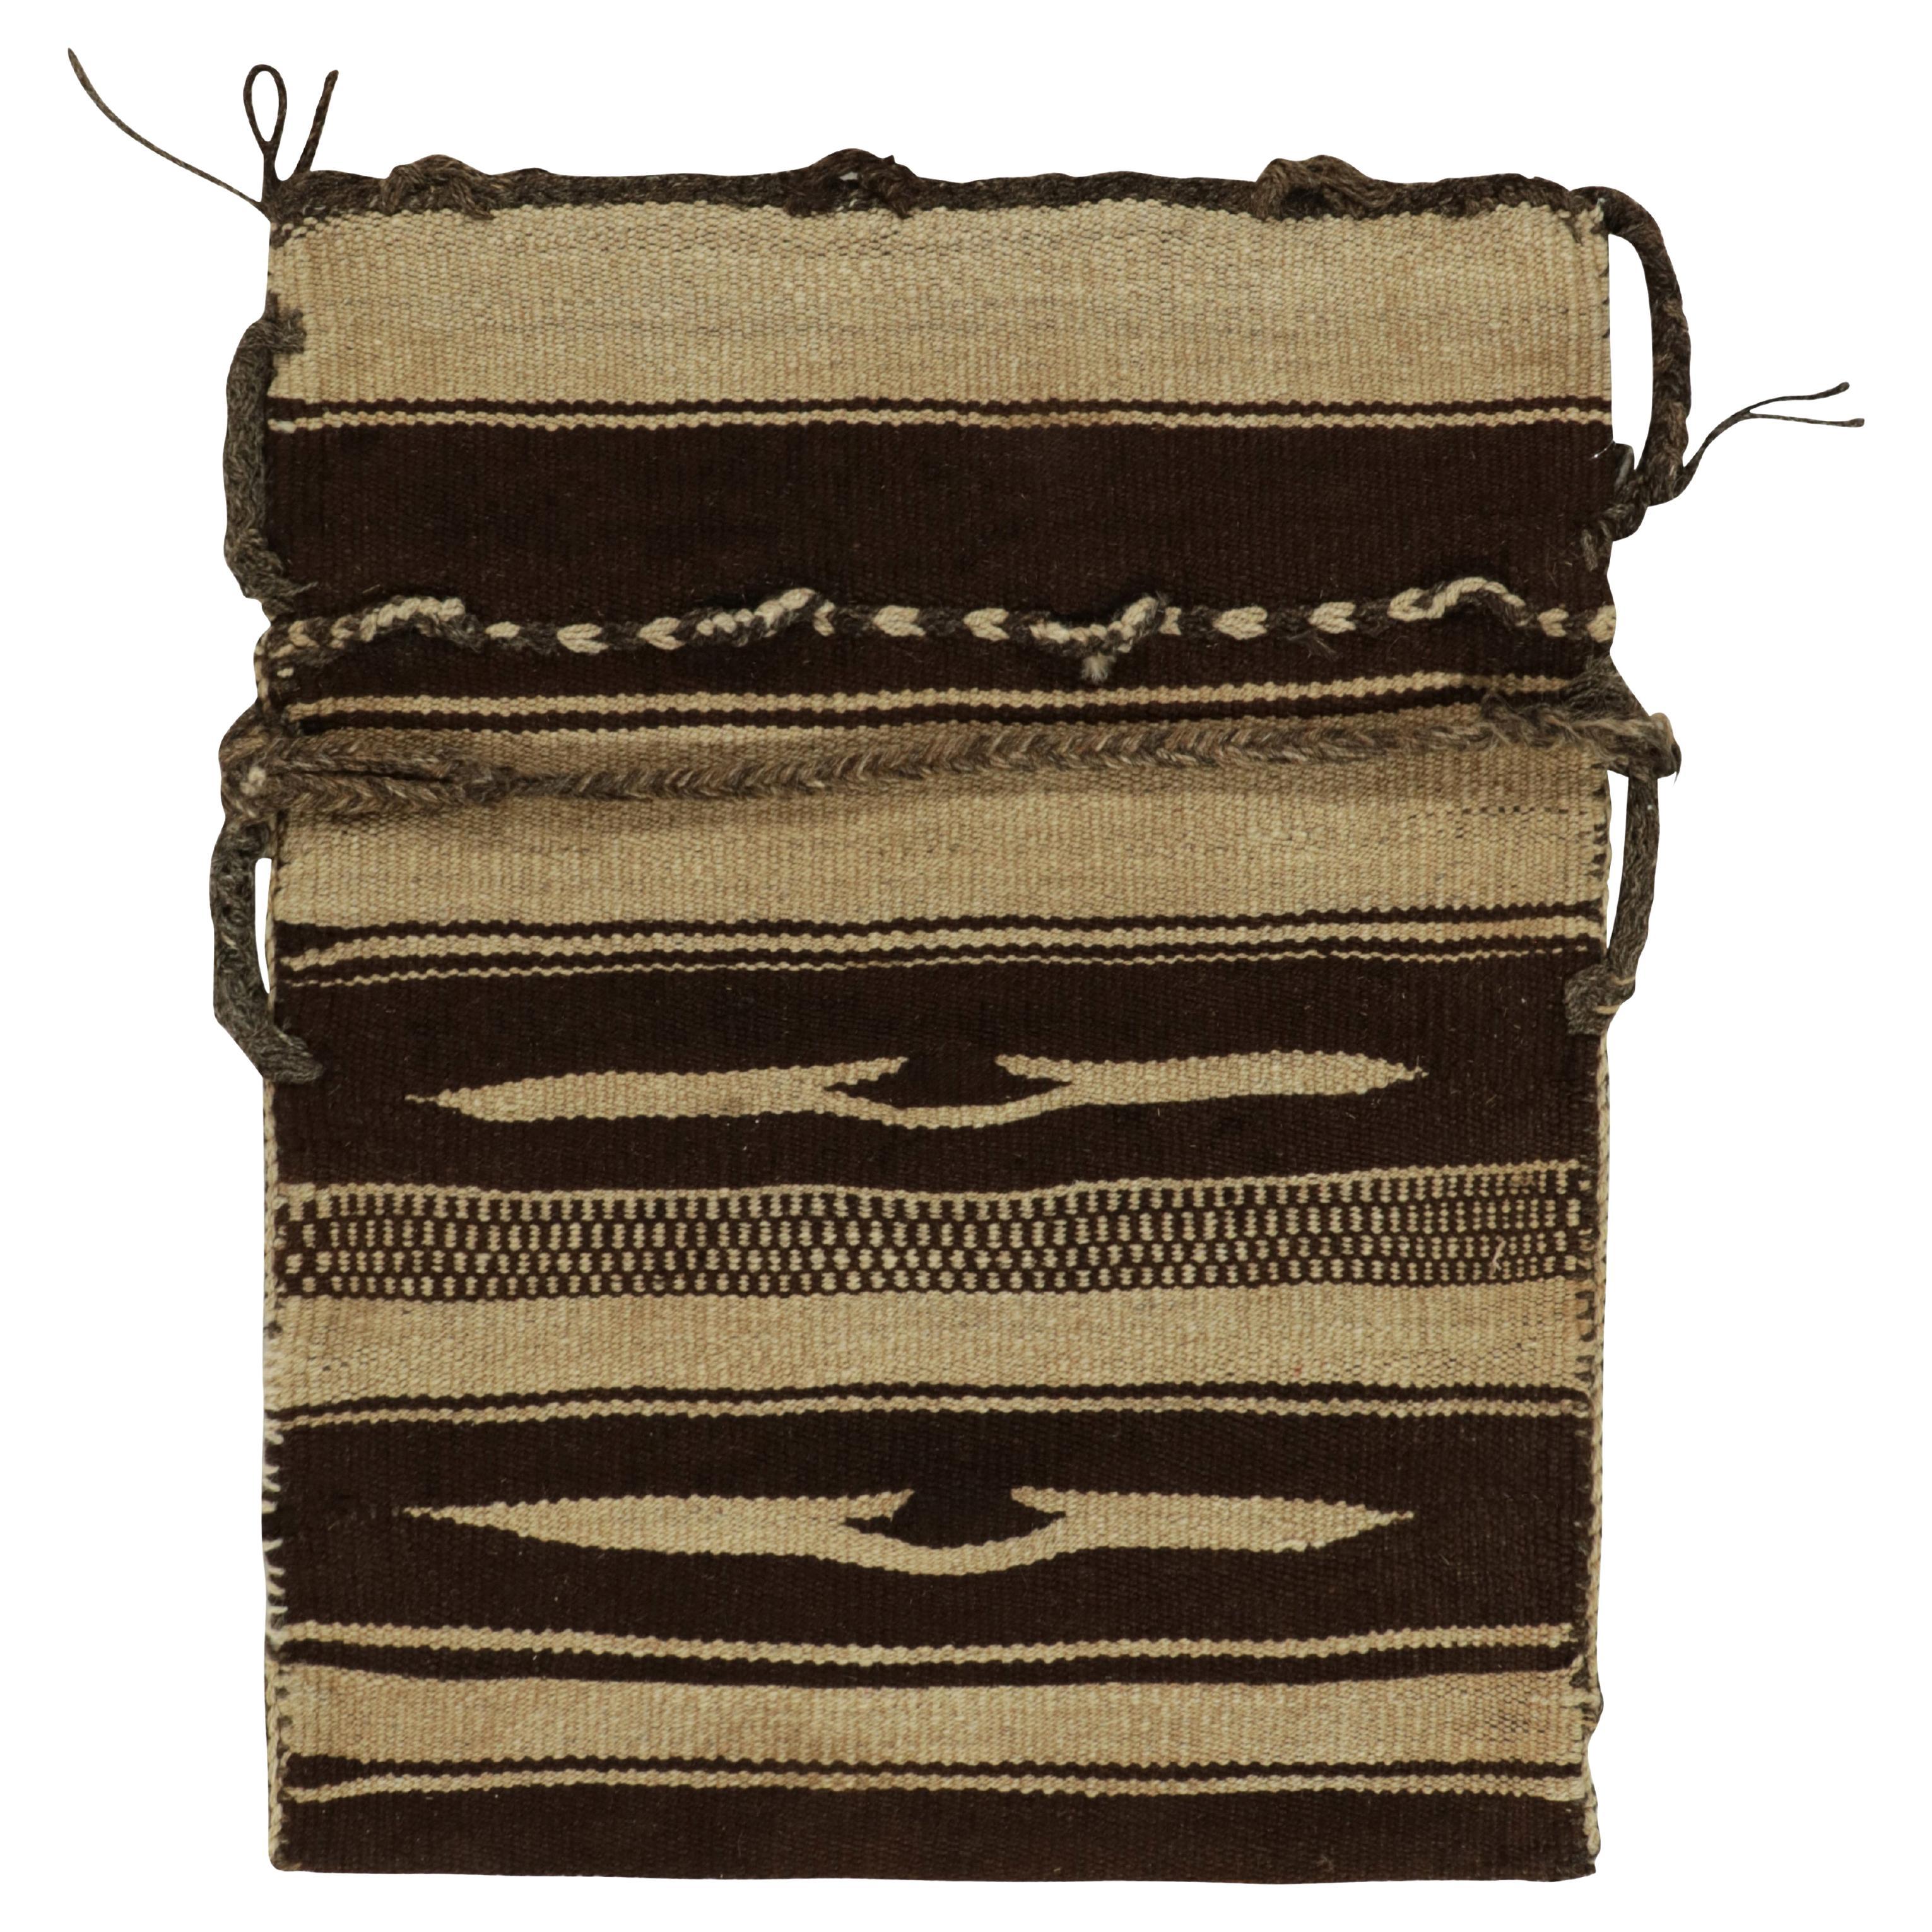 1960s Vintage Kilim Rug in Beige, Brown Tribal Bag Design by Rug & Kilim For Sale